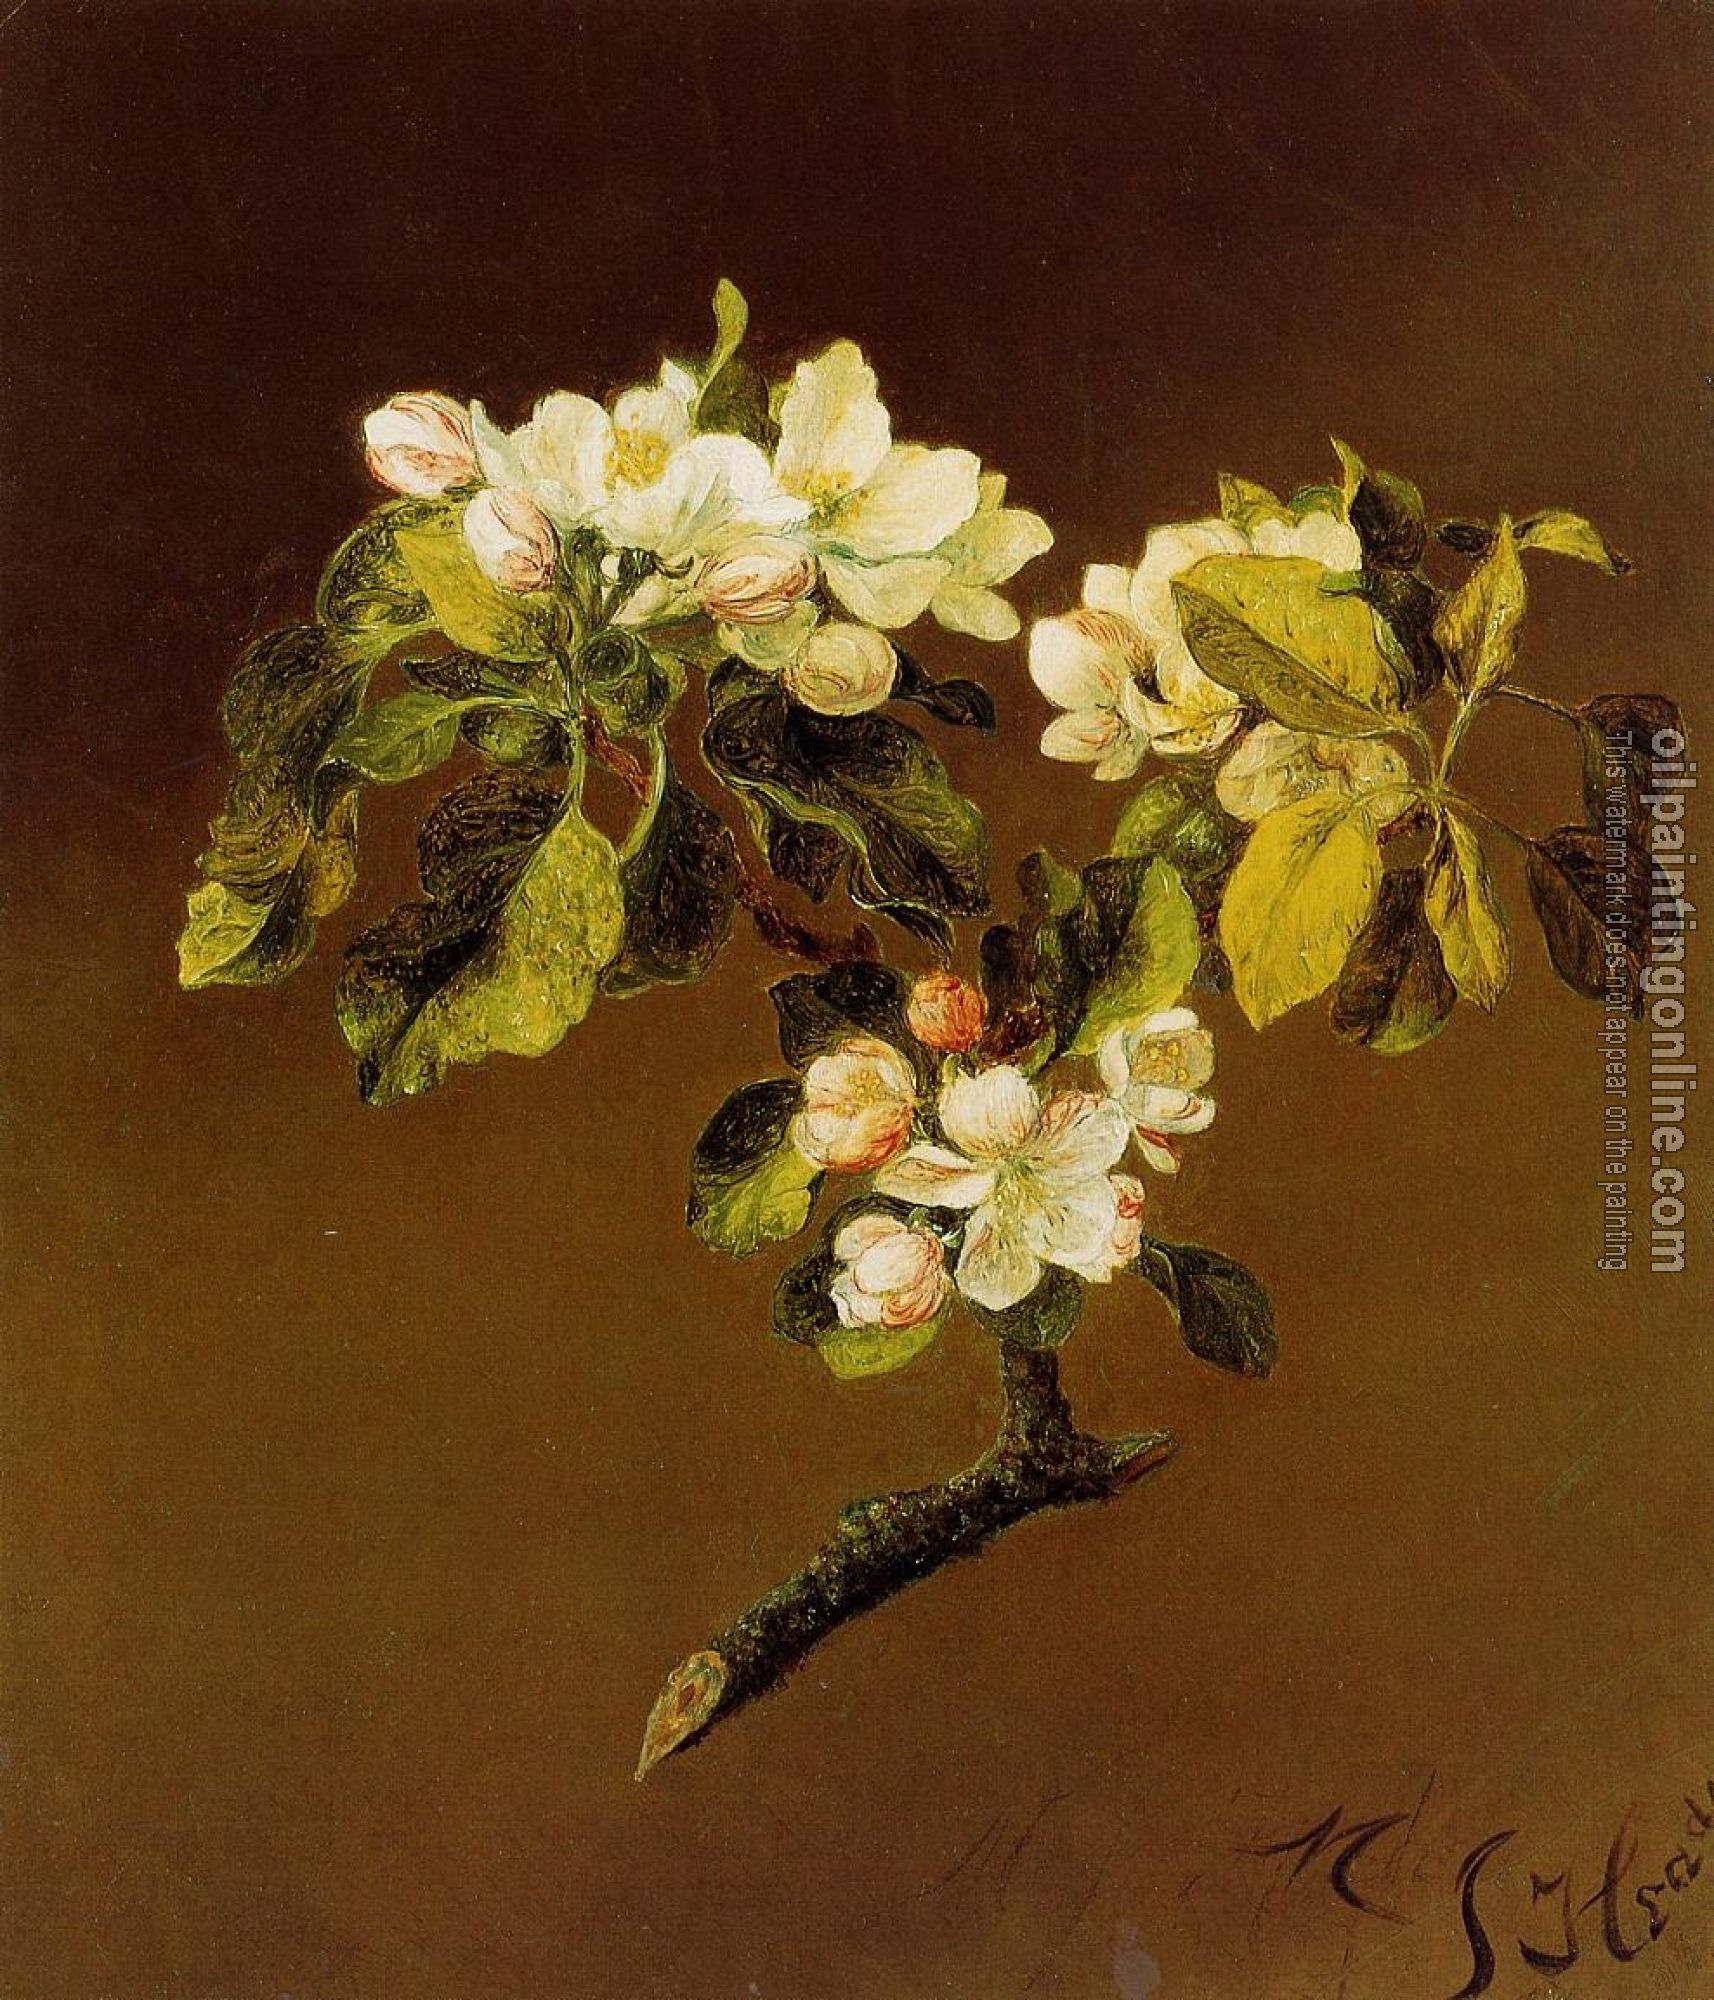 Heade, Martin Johnson - A Spray of Apple Blossoms